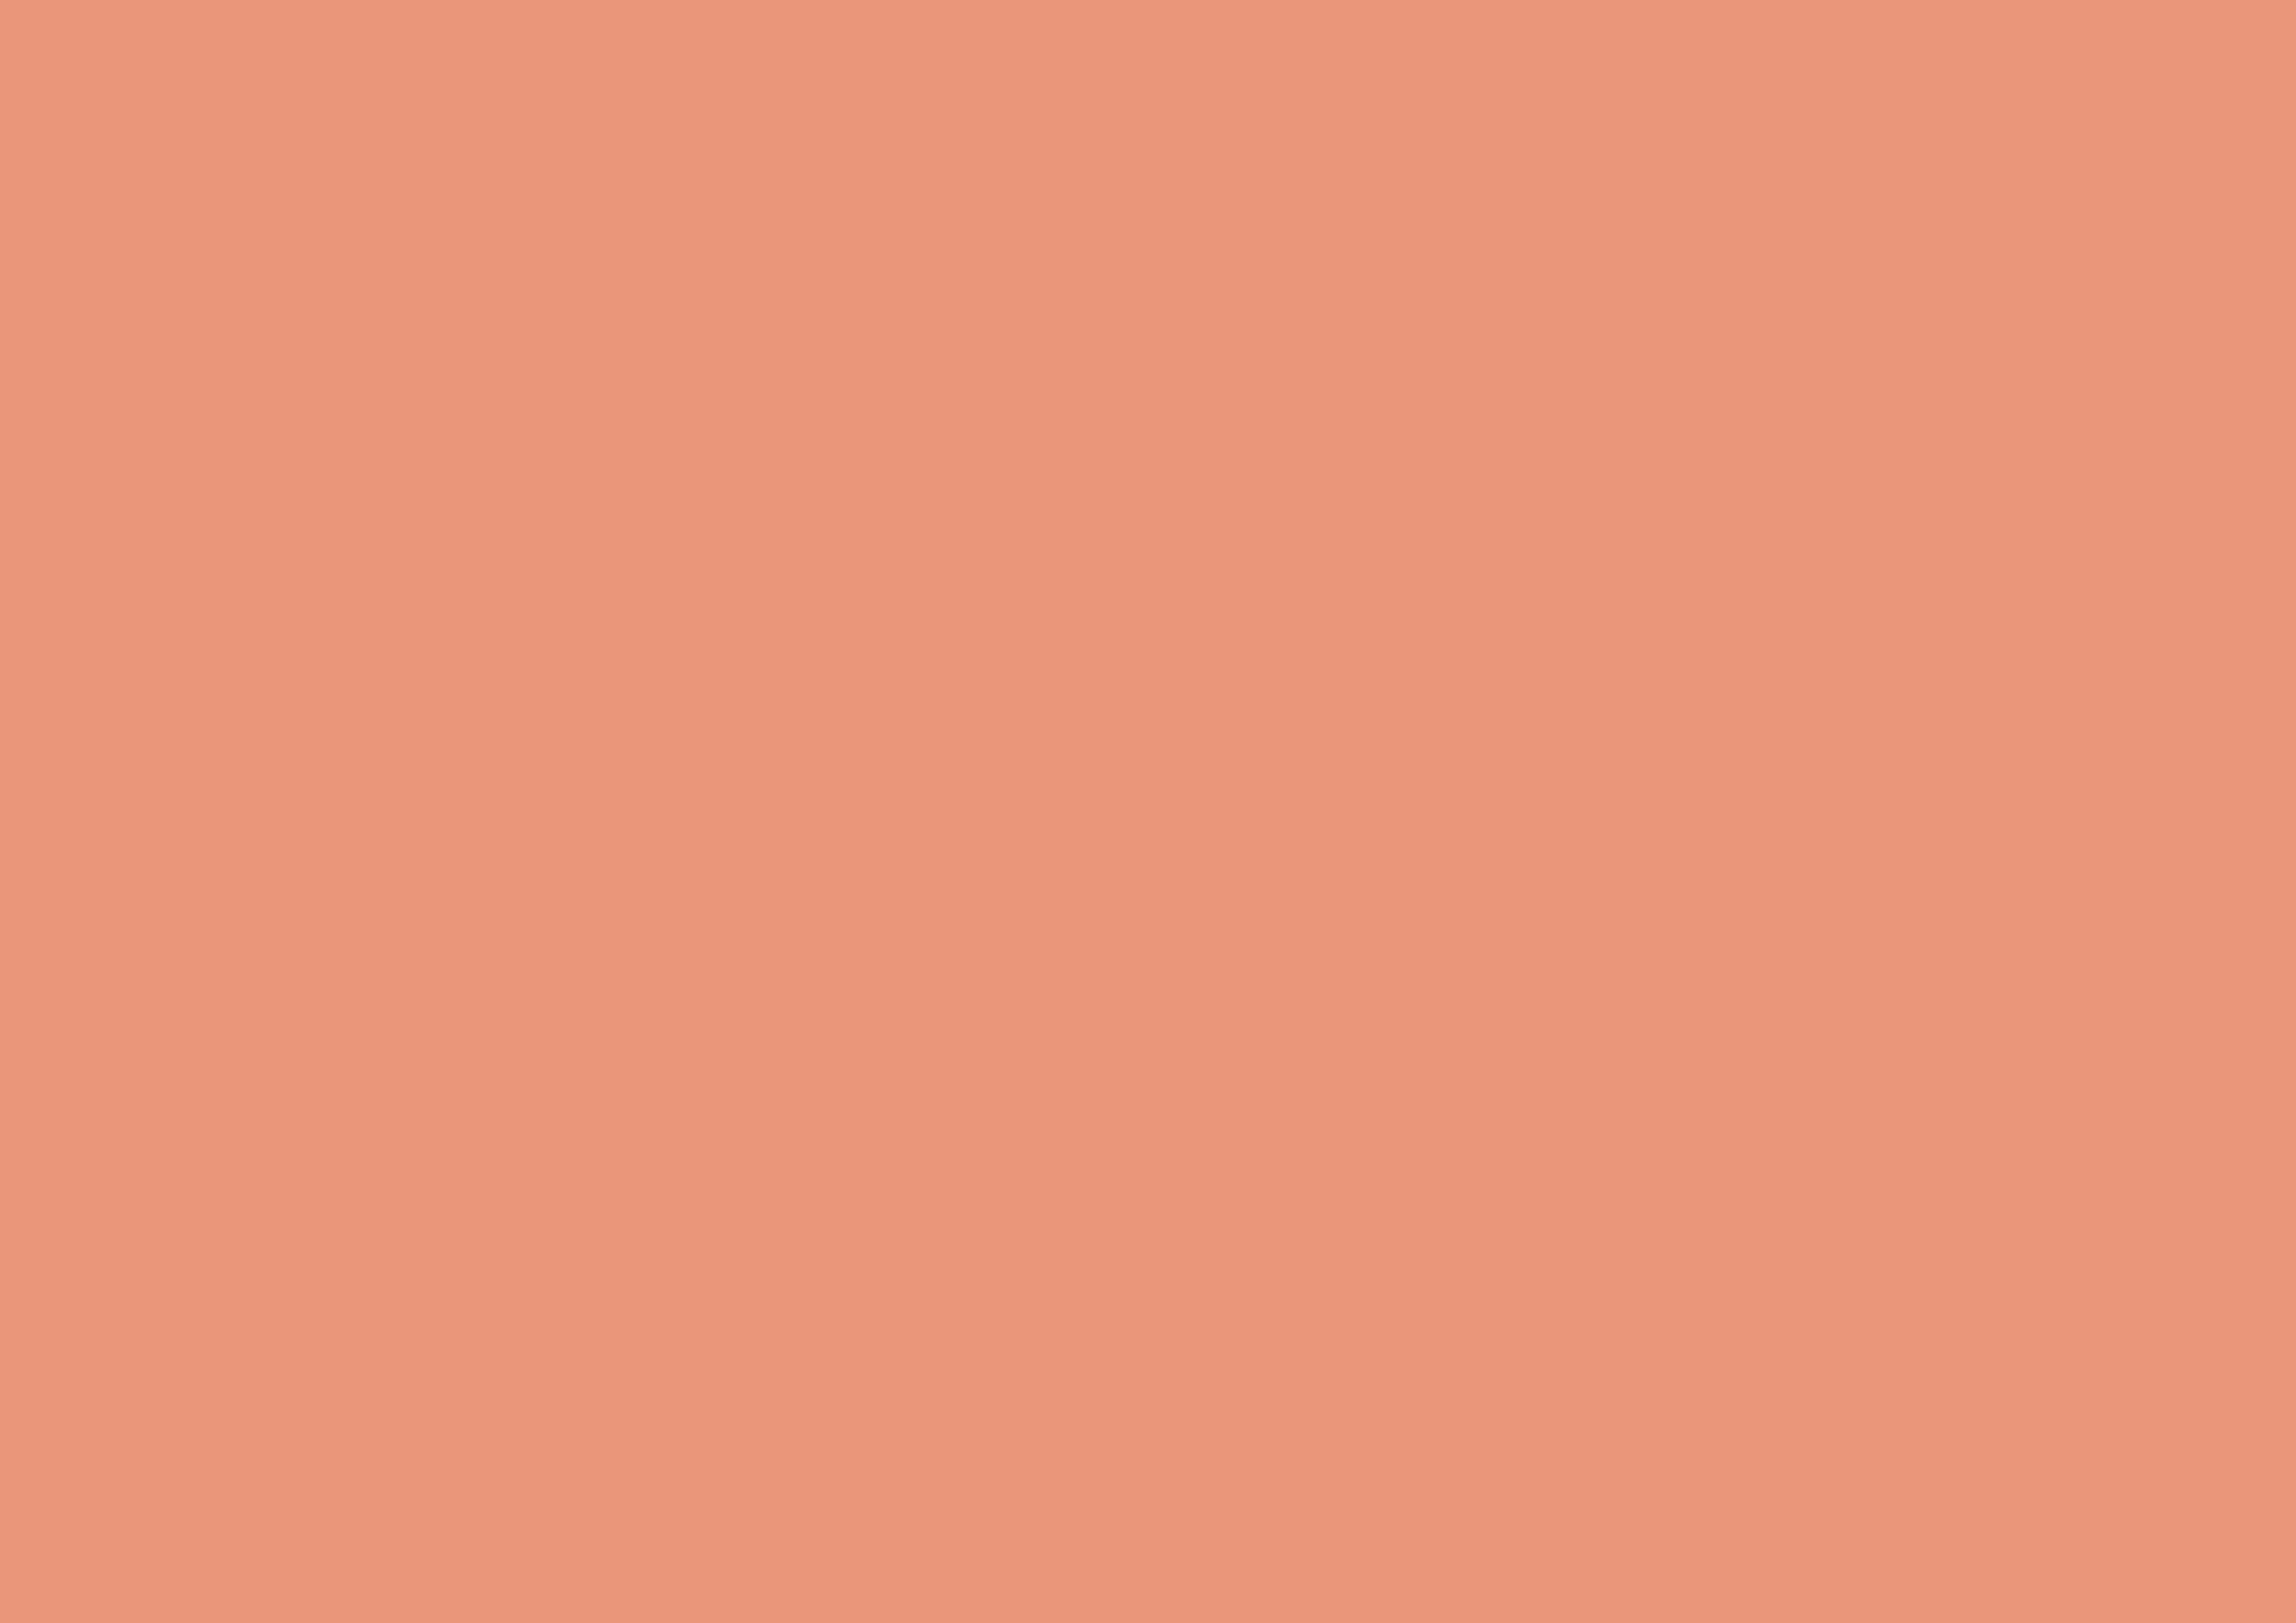 3508x2480 Dark Salmon Solid Color Background